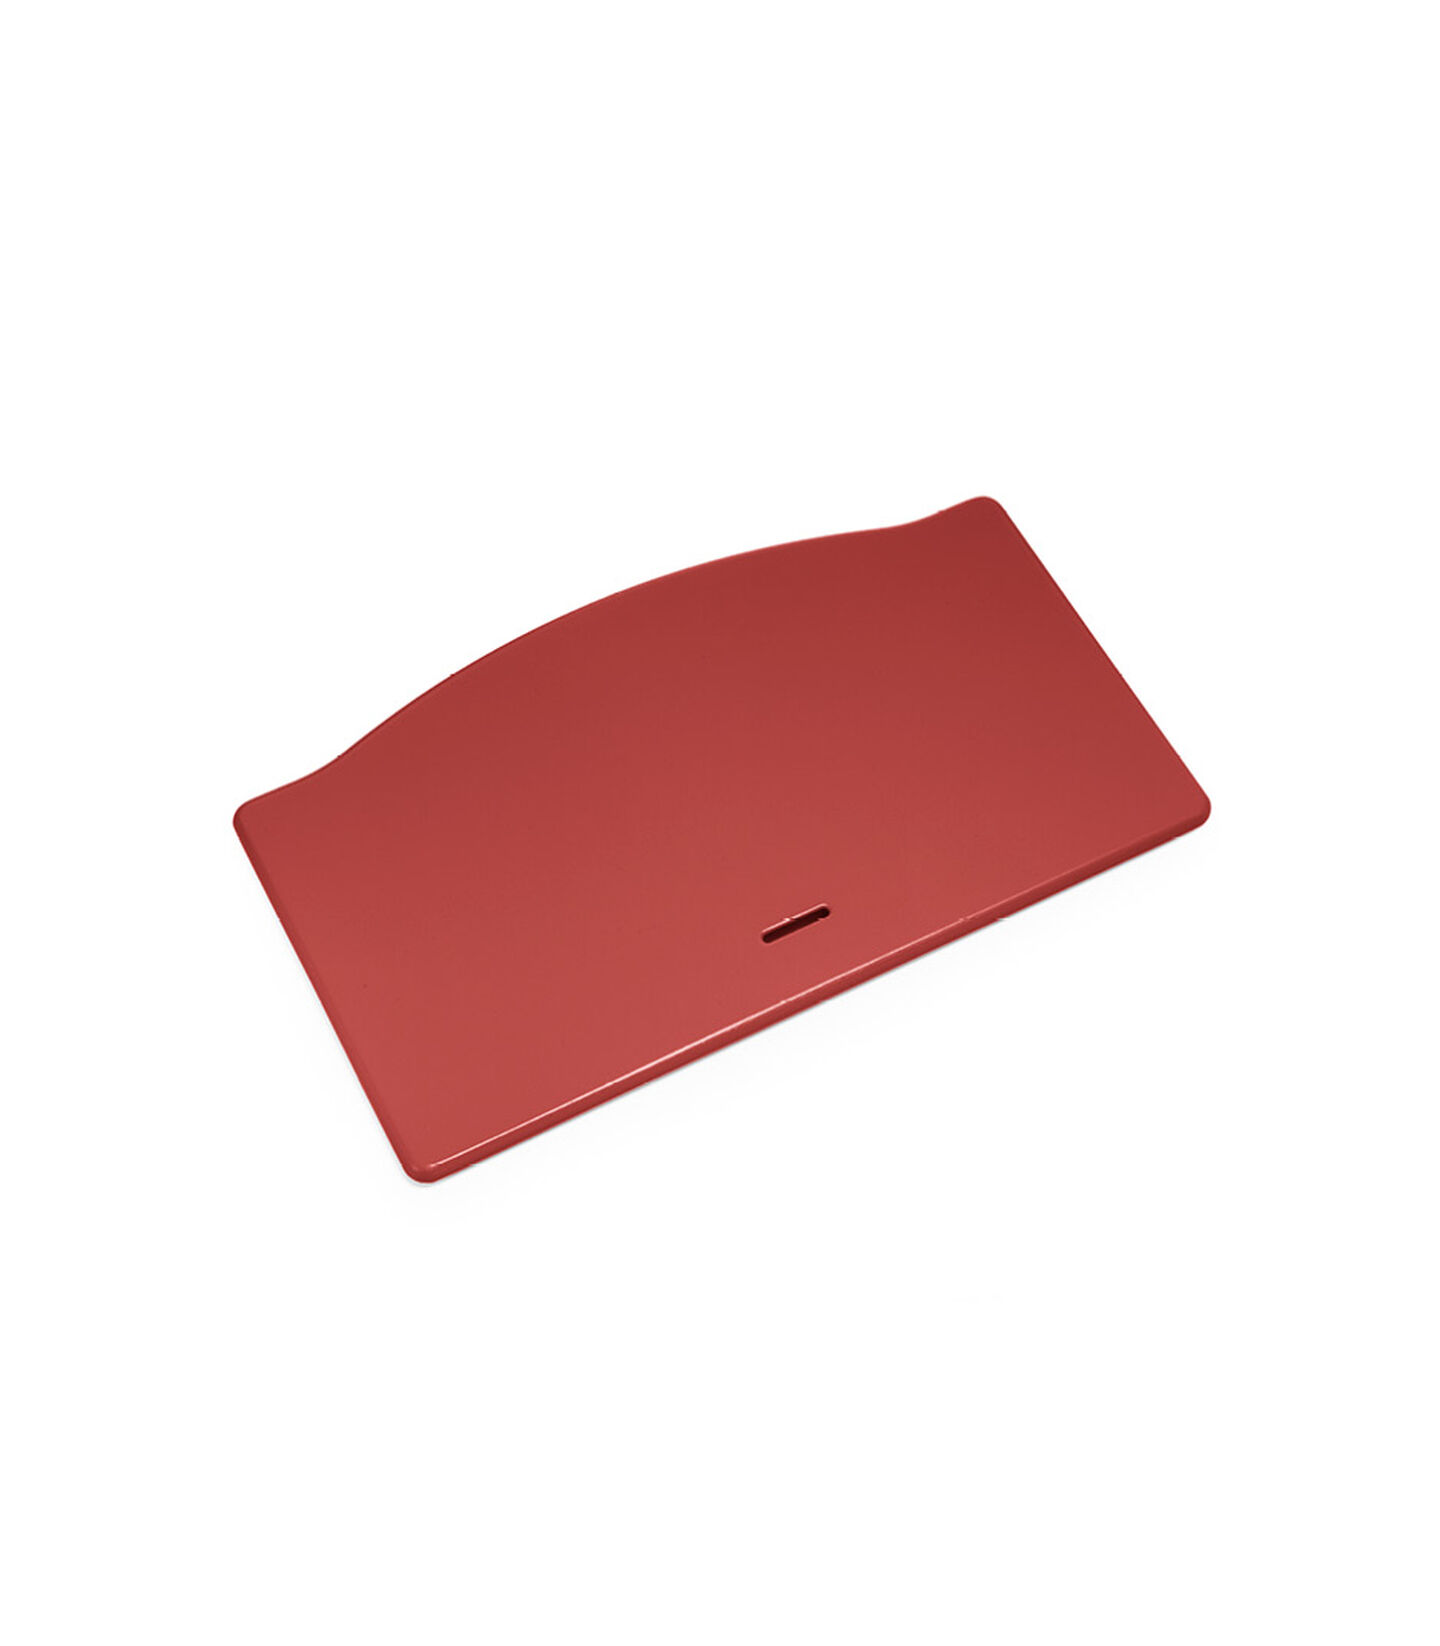 Tripp Trapp® Sitzplatte Warm Red, Warm Red, mainview view 1